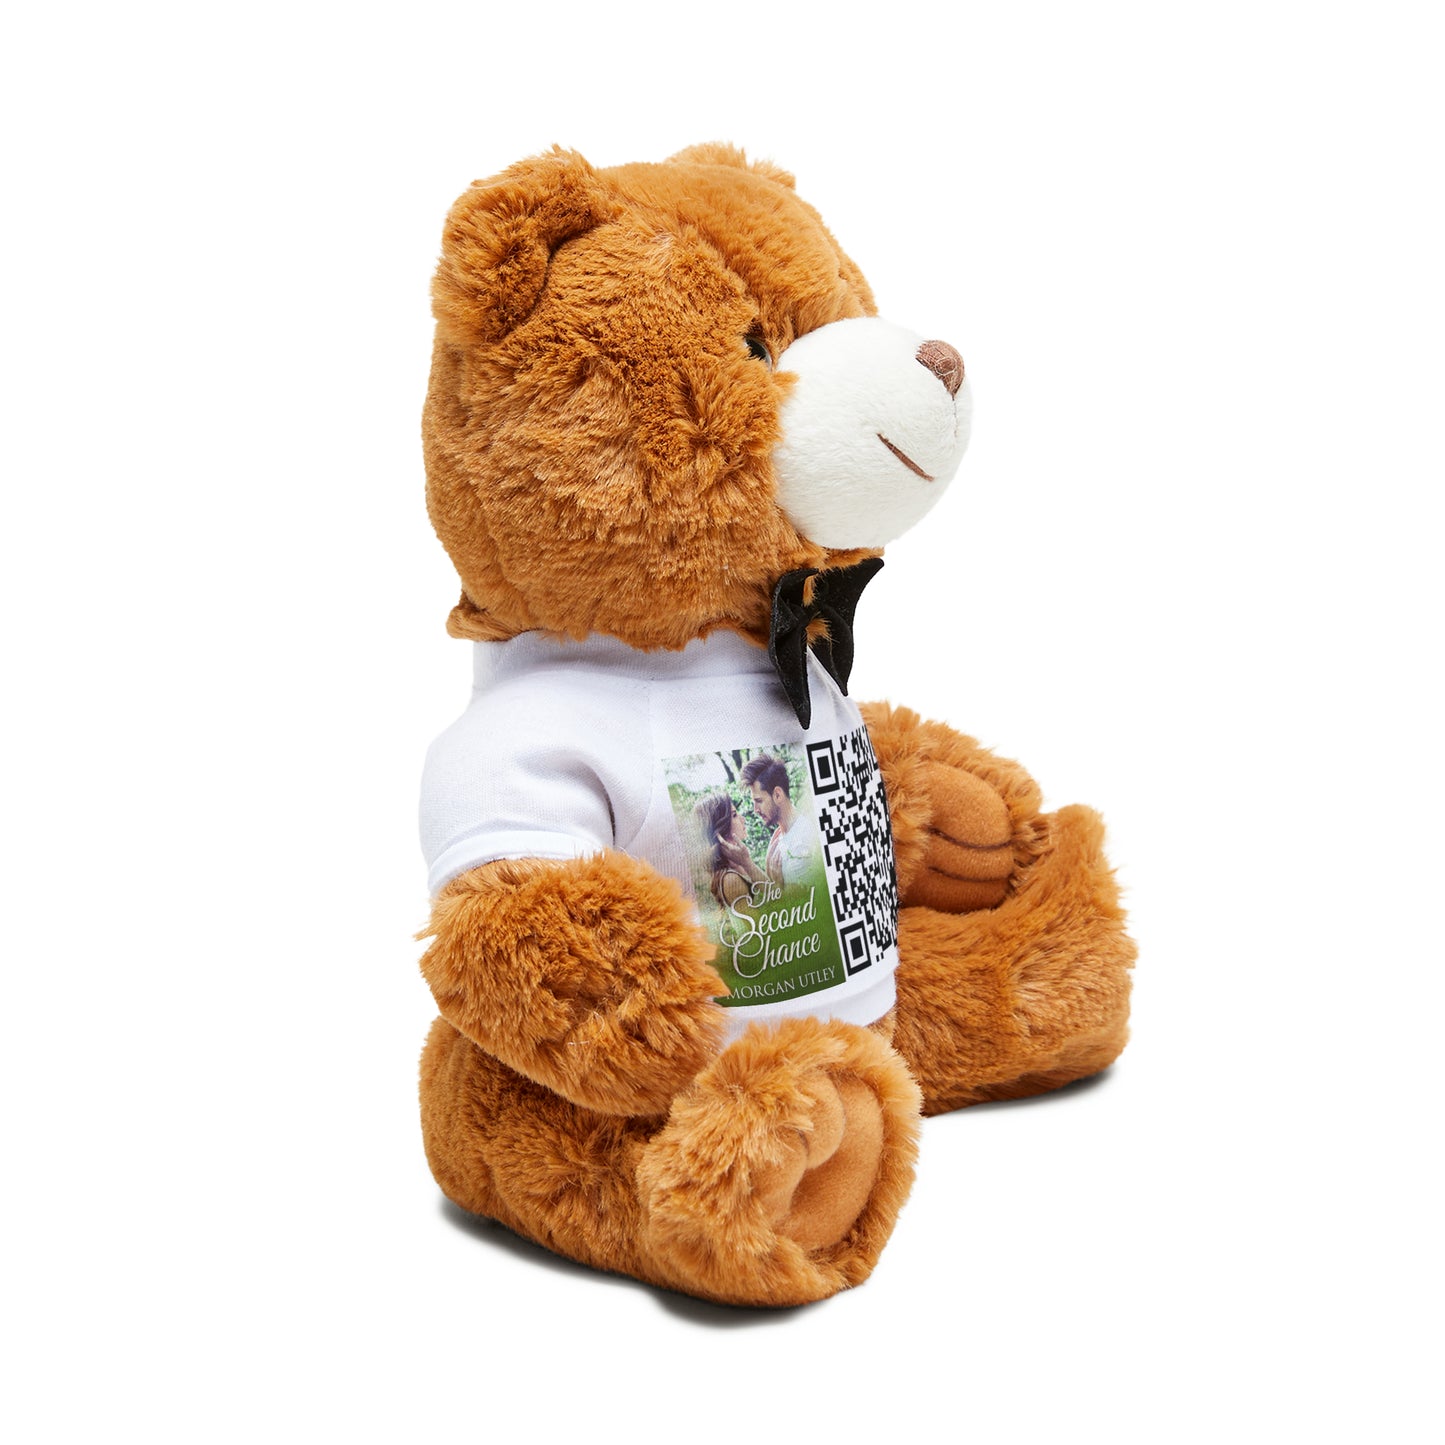 The Second Chance - Teddy Bear